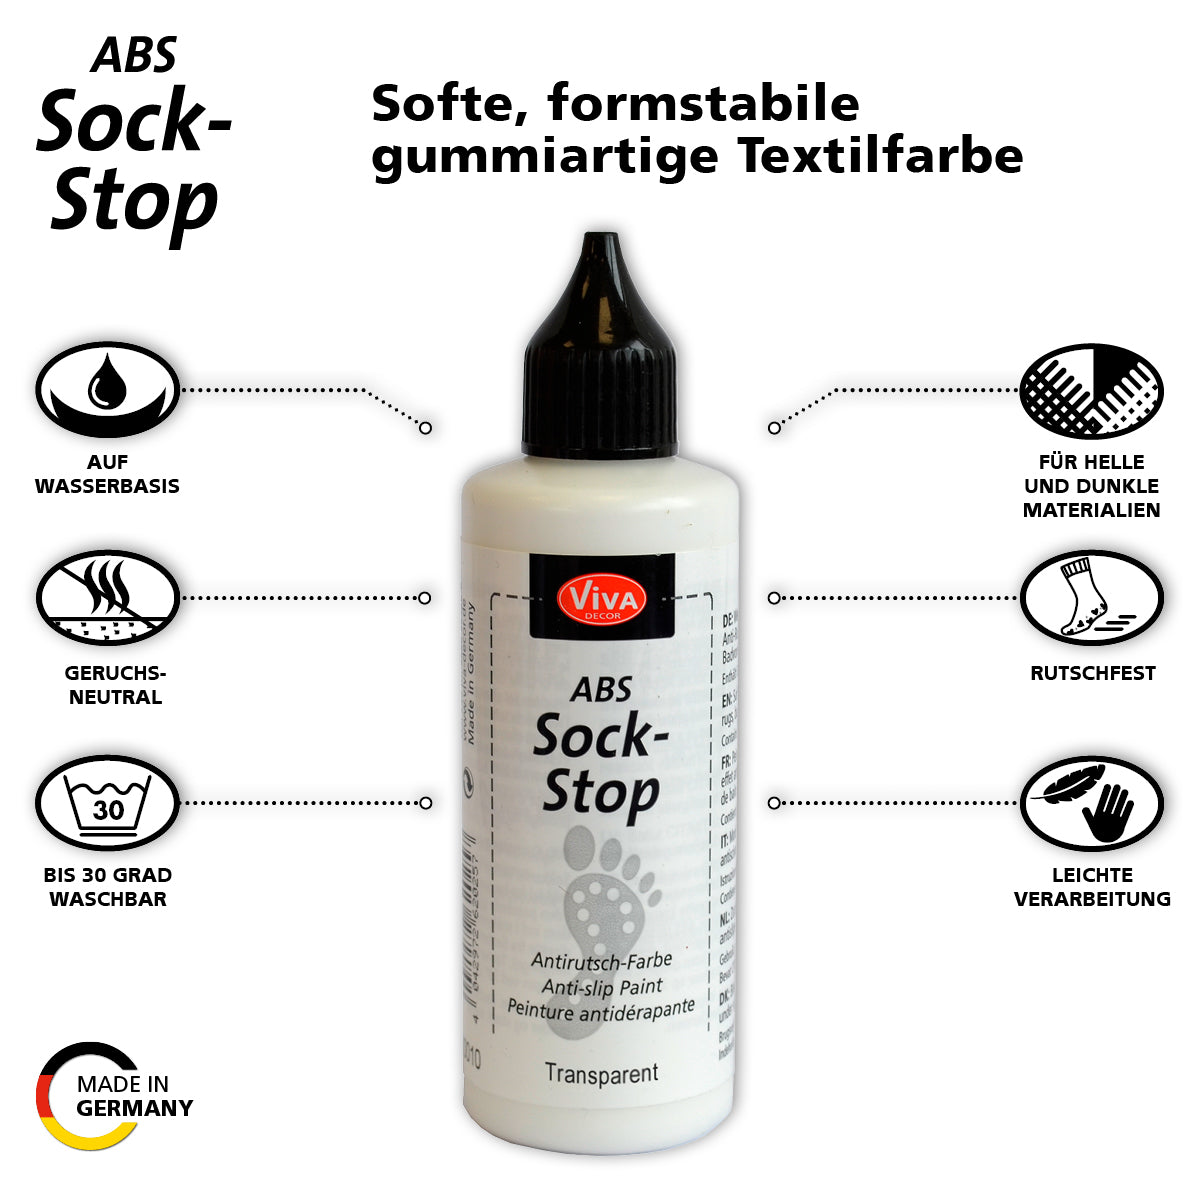 Sock Stop